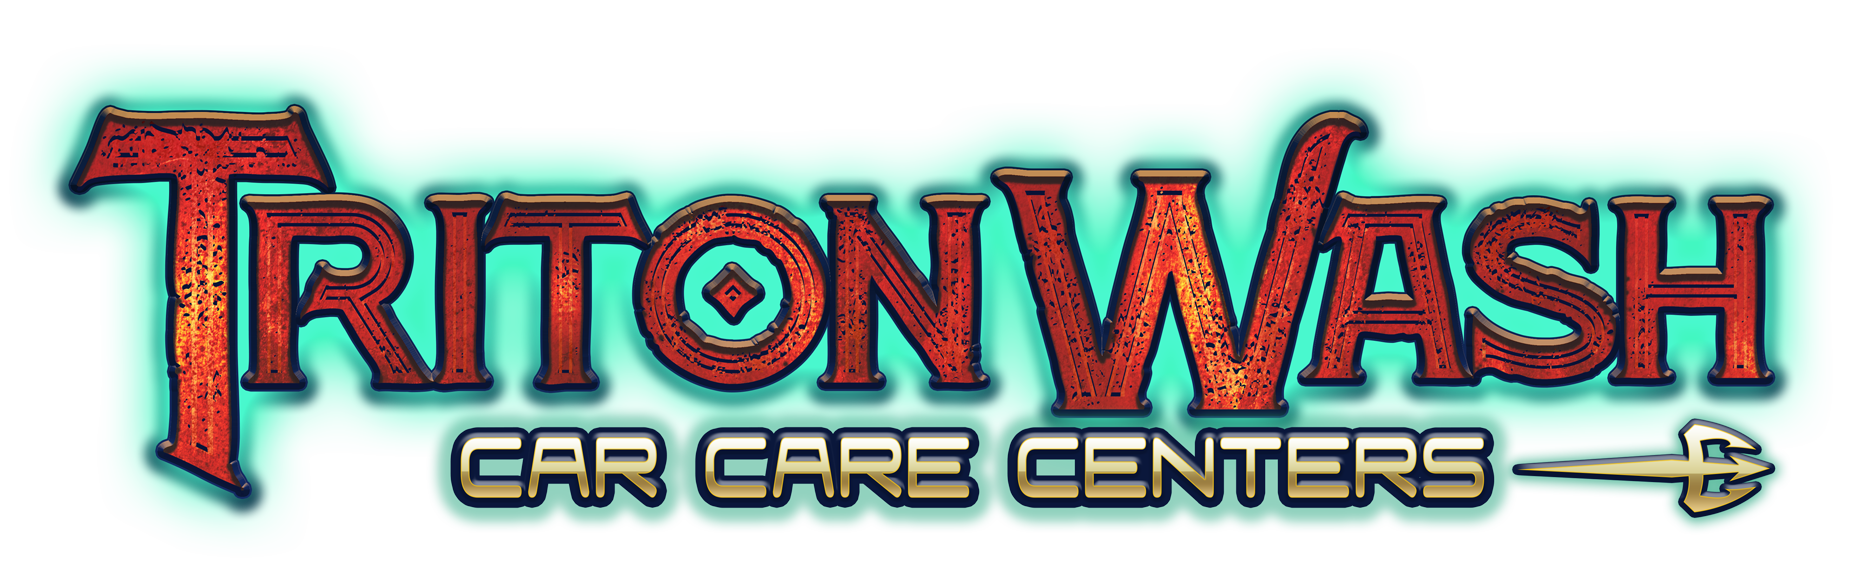 Triton Car Care Center